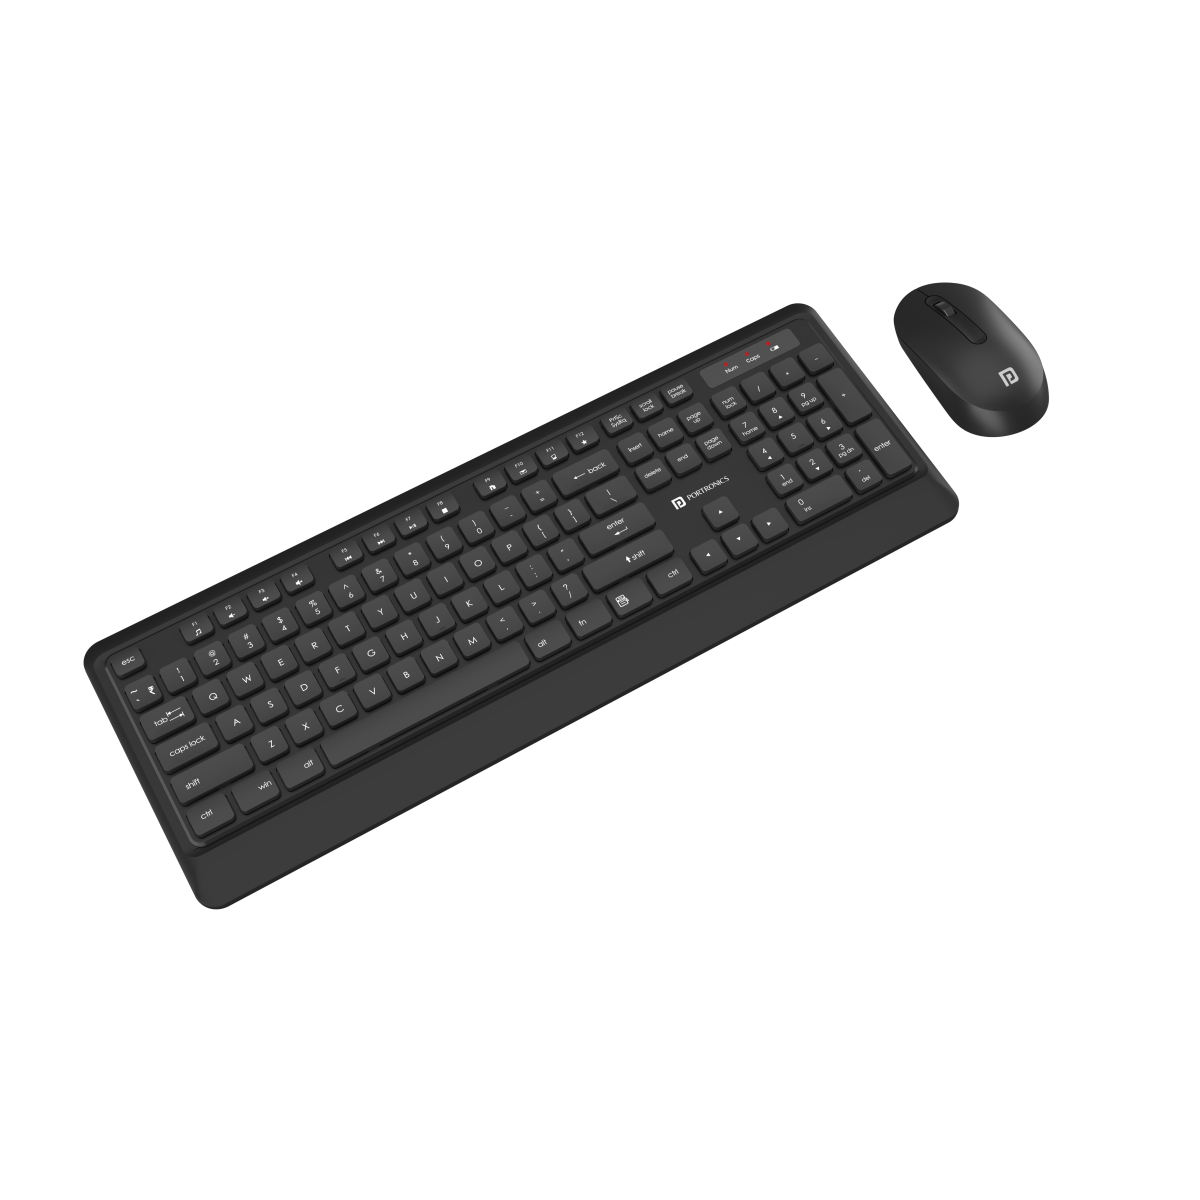 Portronics Key5 Combo - Multimedia Wireless Keyboard and Mouse, Z Black(POR 1658)